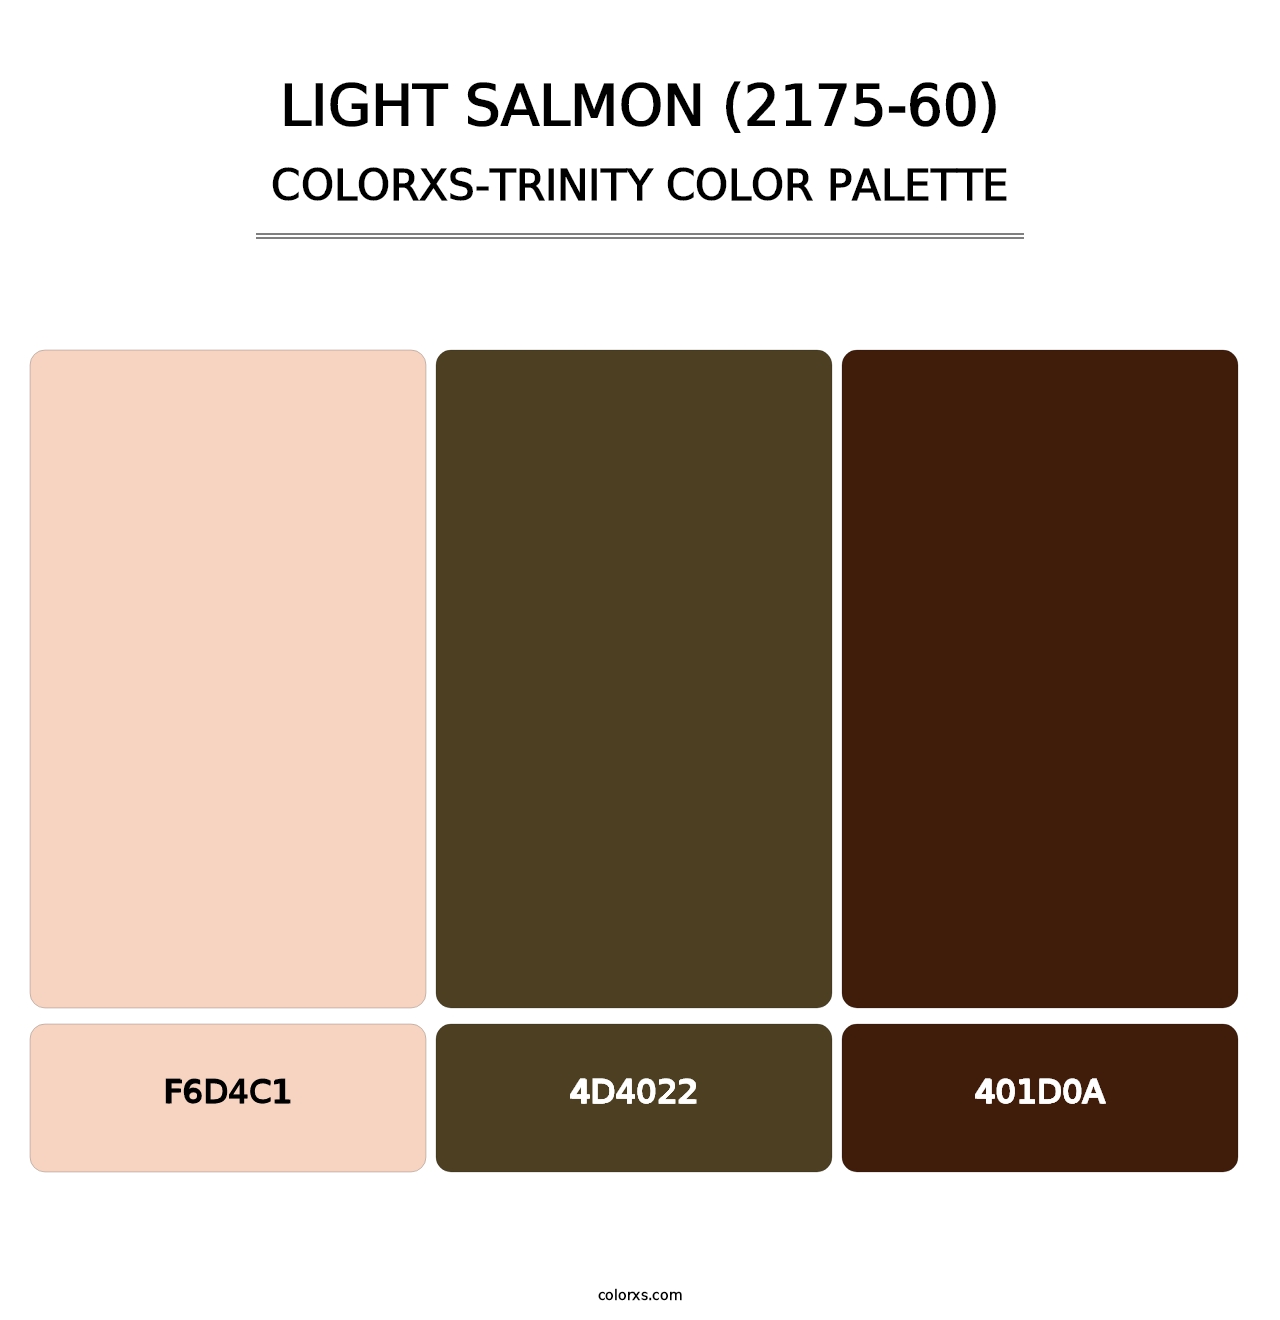 Light Salmon (2175-60) - Colorxs Trinity Palette